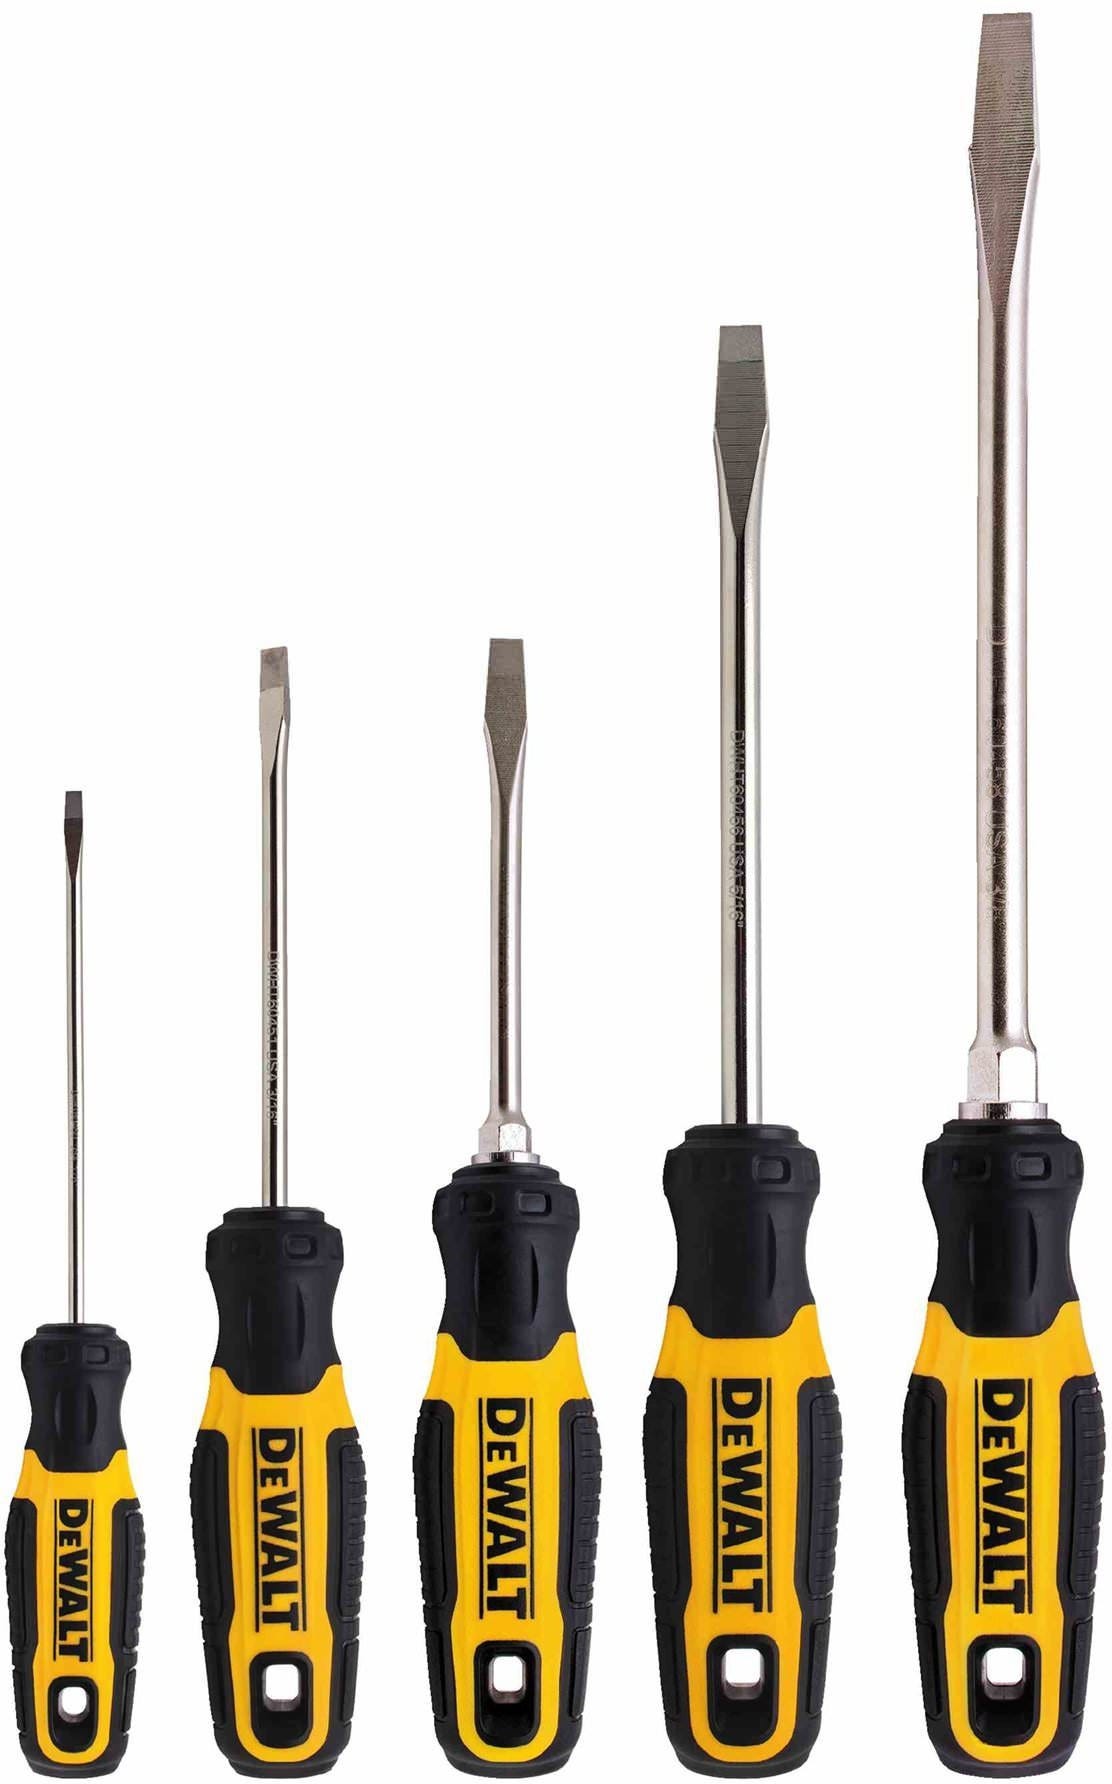 dewalt screwdriver set